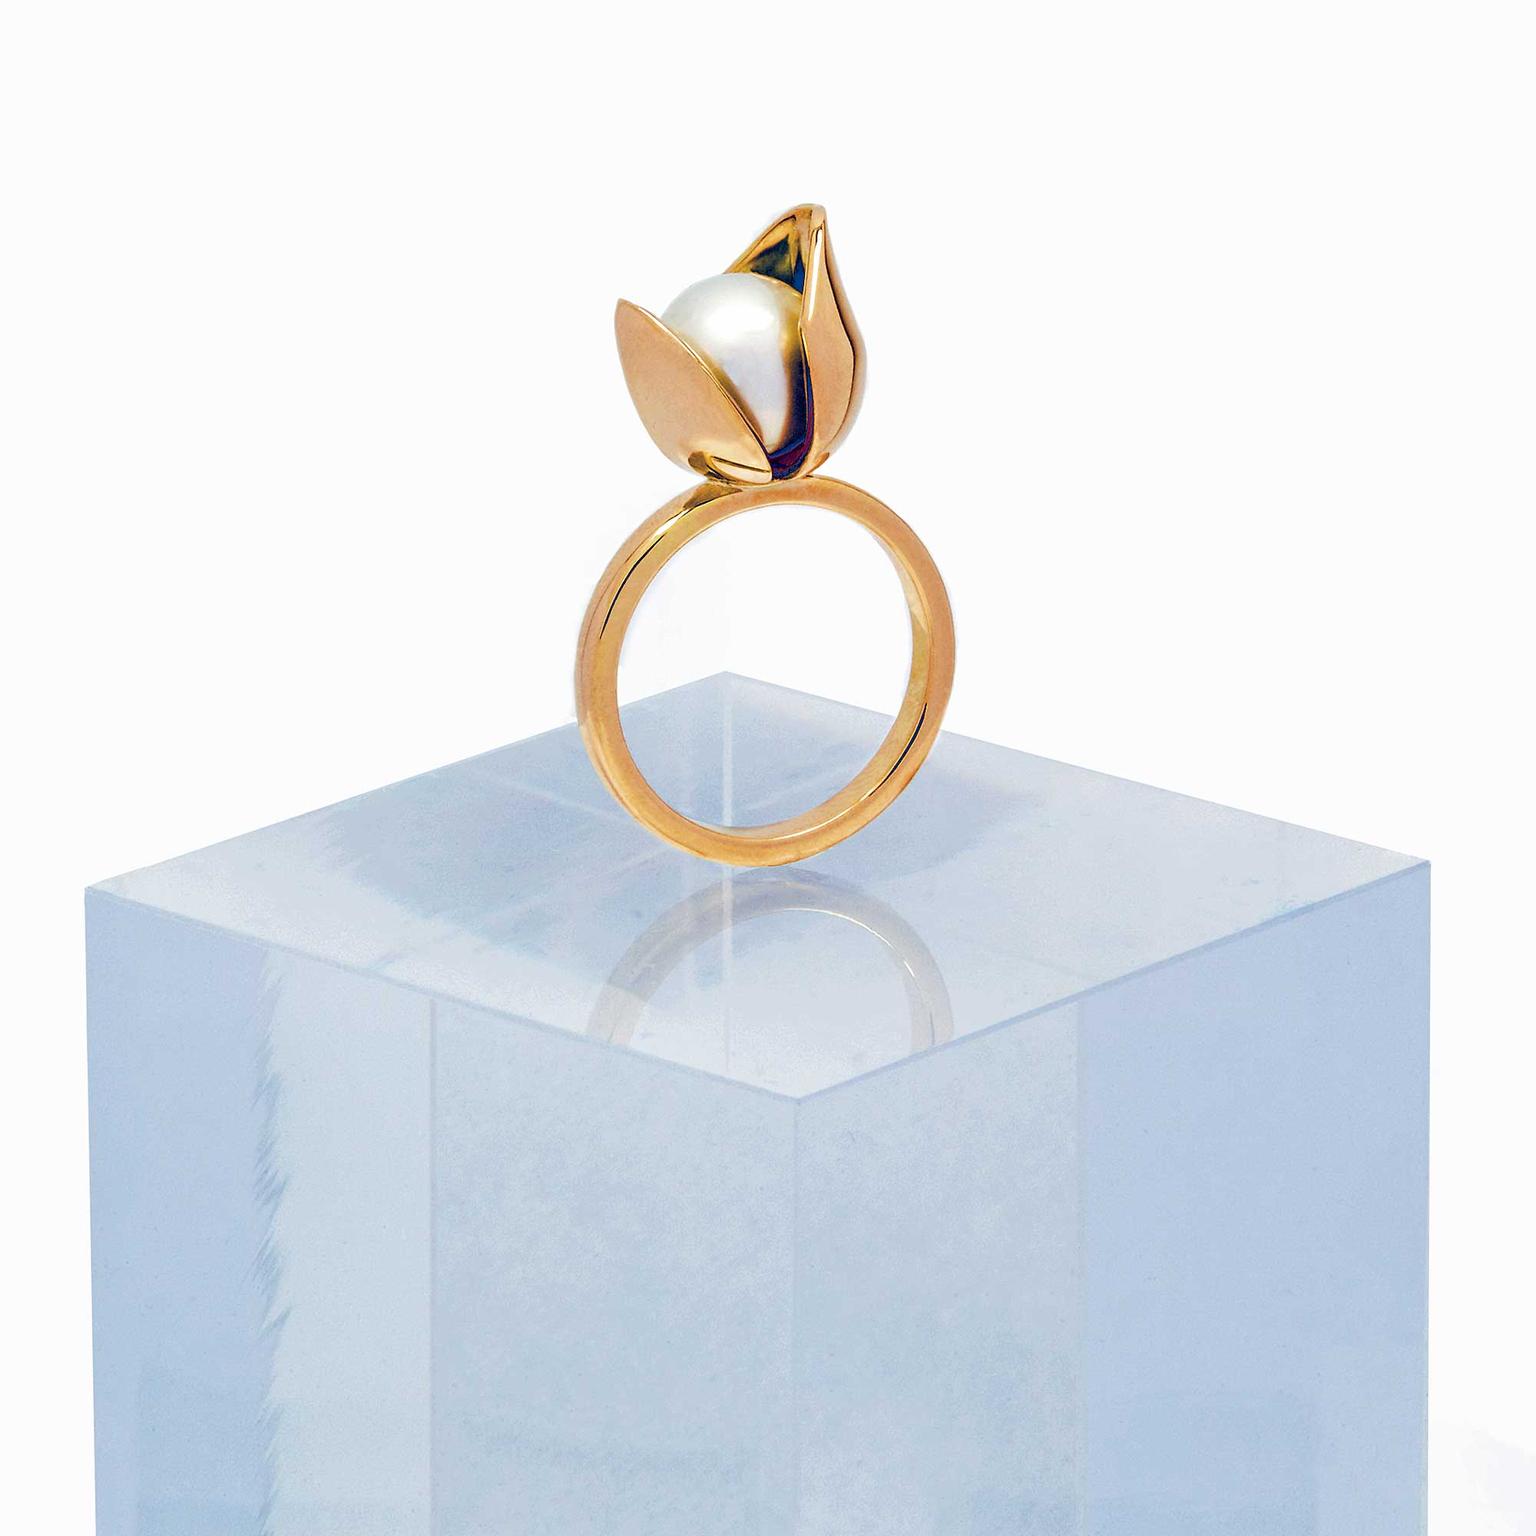 Tessa Packard Orchid ring